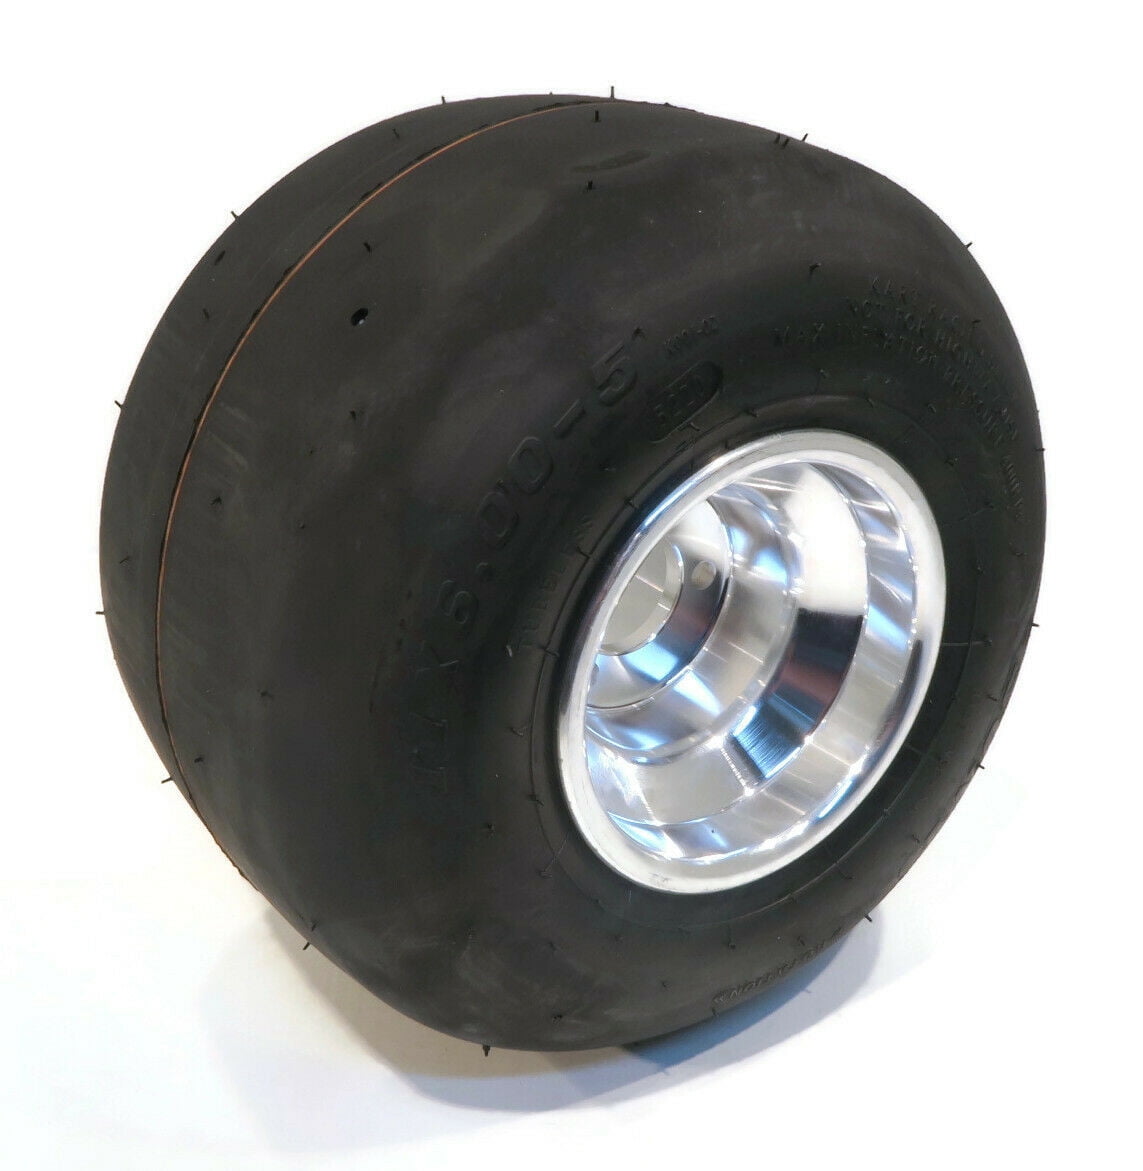 Tubeless Racing Slick Tire 11x6.00-5 with Aluminum Wheel/Rim for Race Go Kart The ROP Shop 